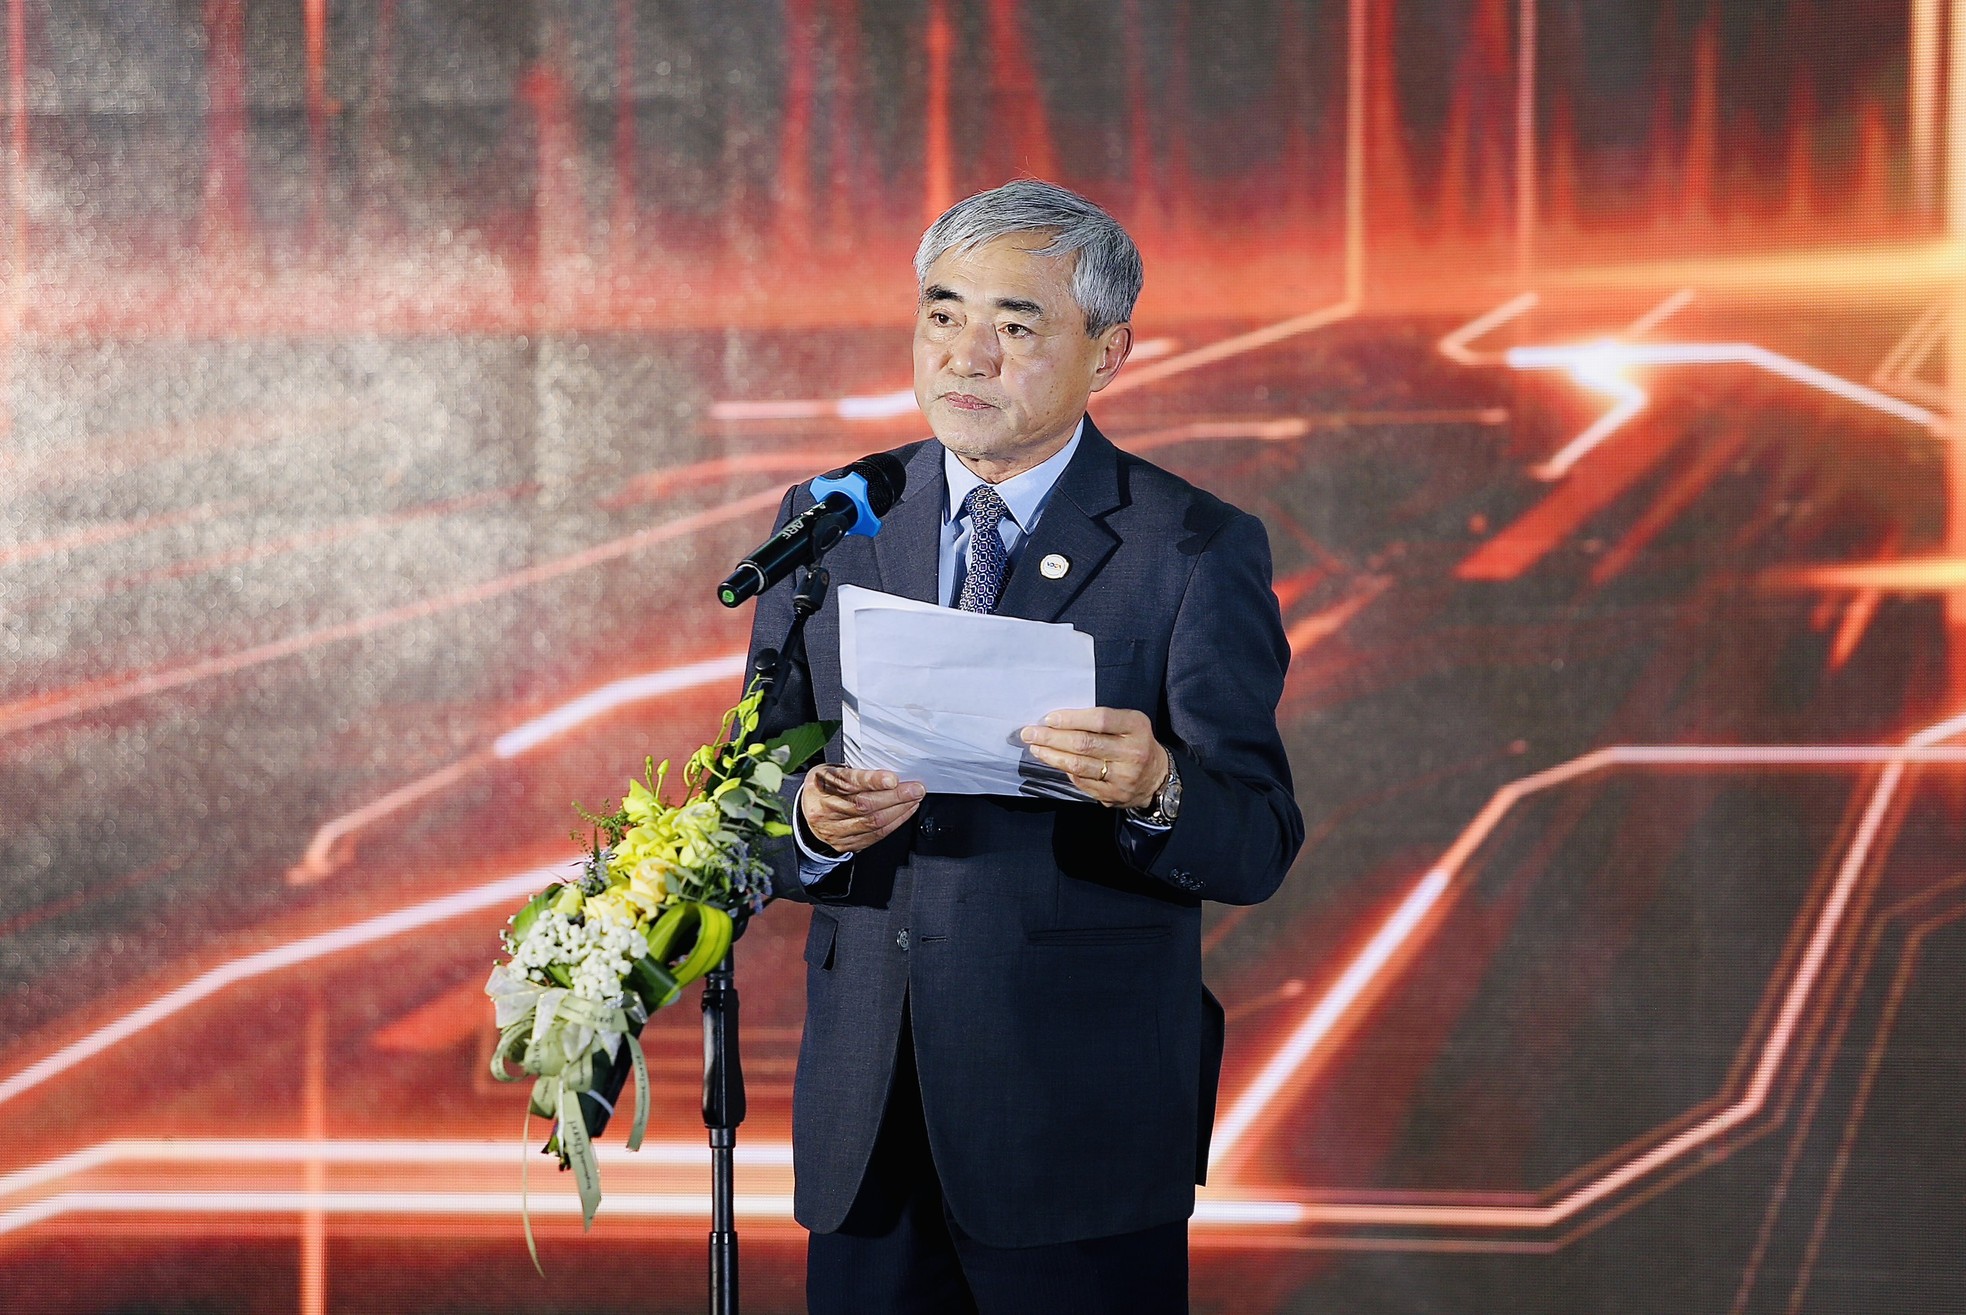 https://tubrr.vn/en/vietnam-digital-content-creation-awards